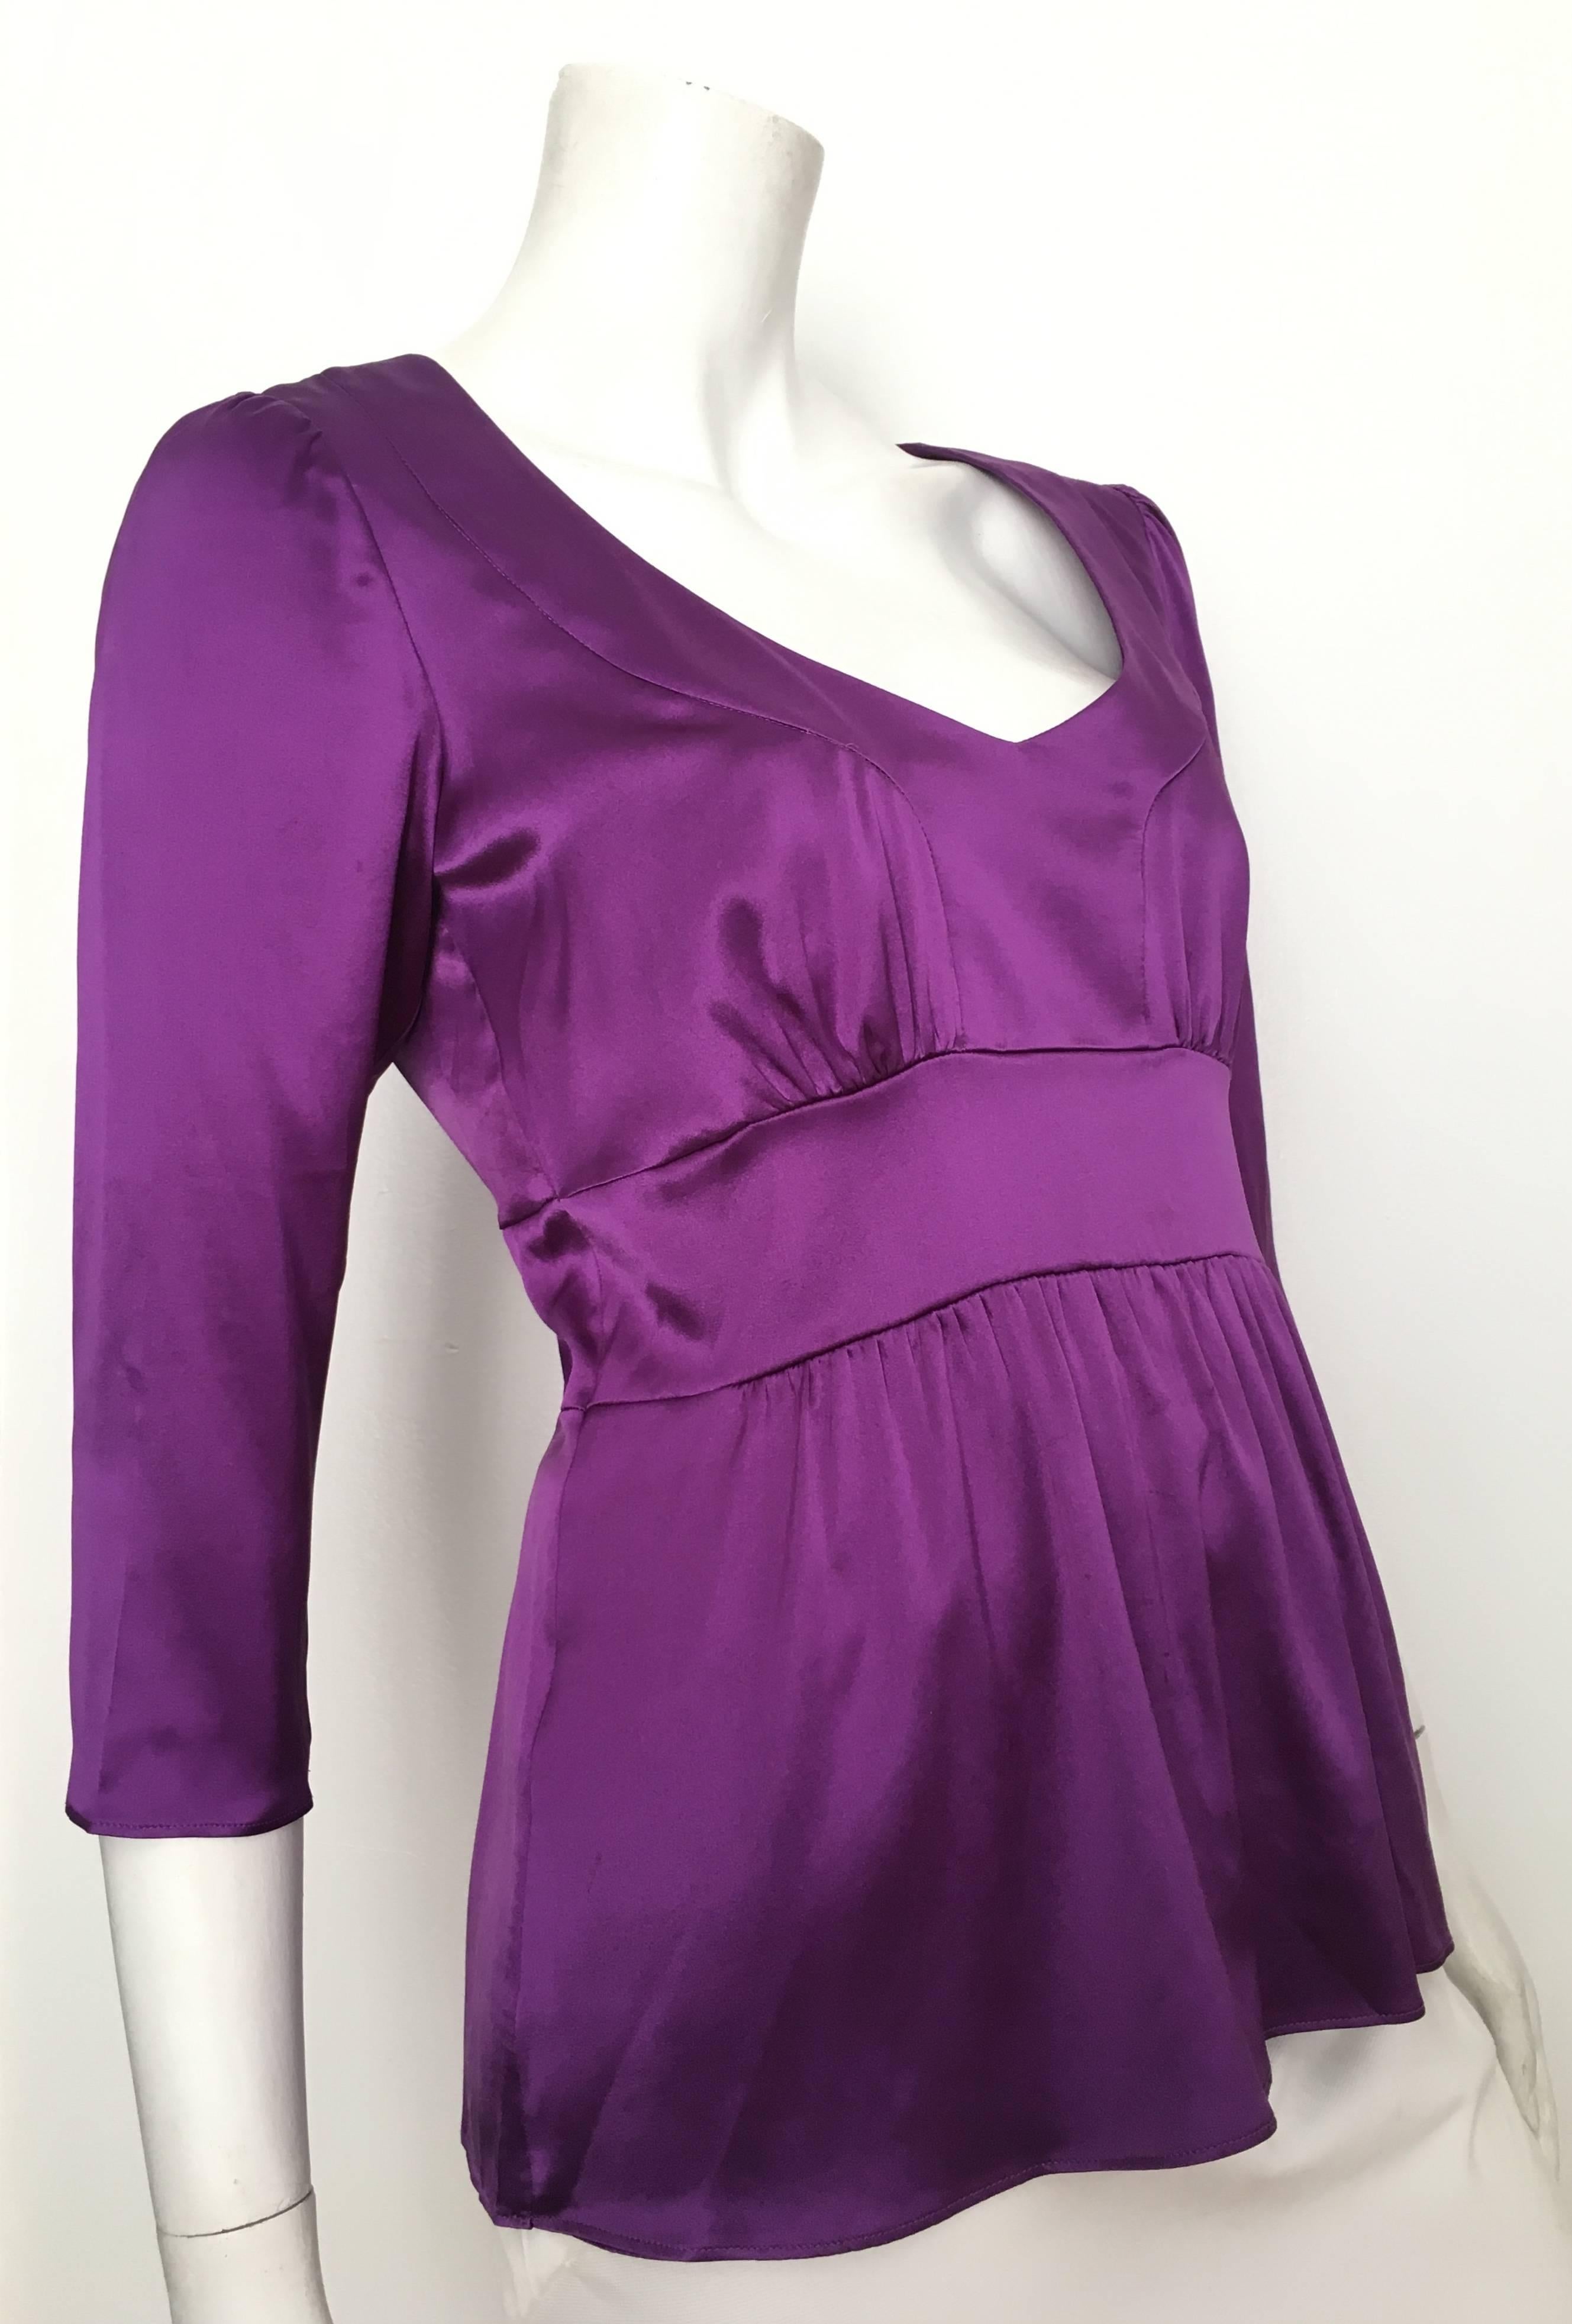 ETRO Silk Purple Blouse Size 6. In Excellent Condition For Sale In Atlanta, GA